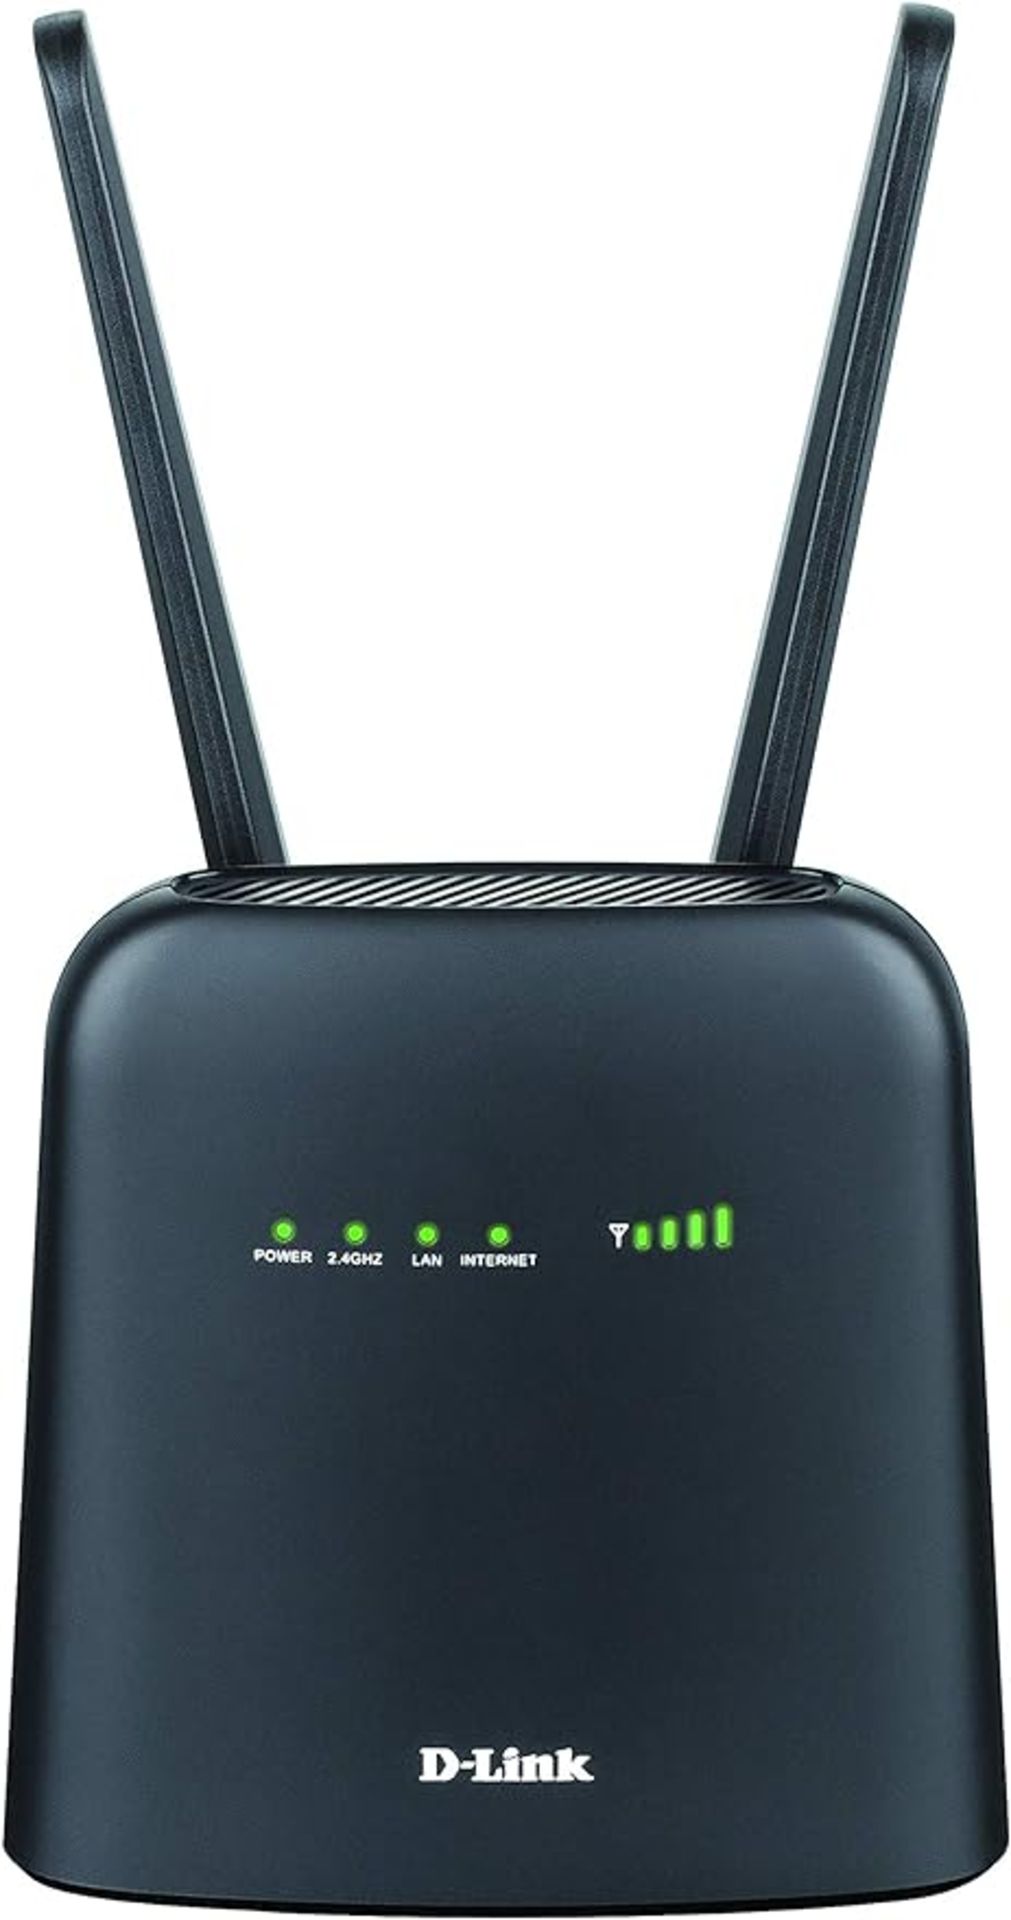 D-Link DWR-920 Wireless N300 4G LTE Router, Cat4 Mobile Wi-Fi Router, 4G/3G, Multi WAN, Gigabit